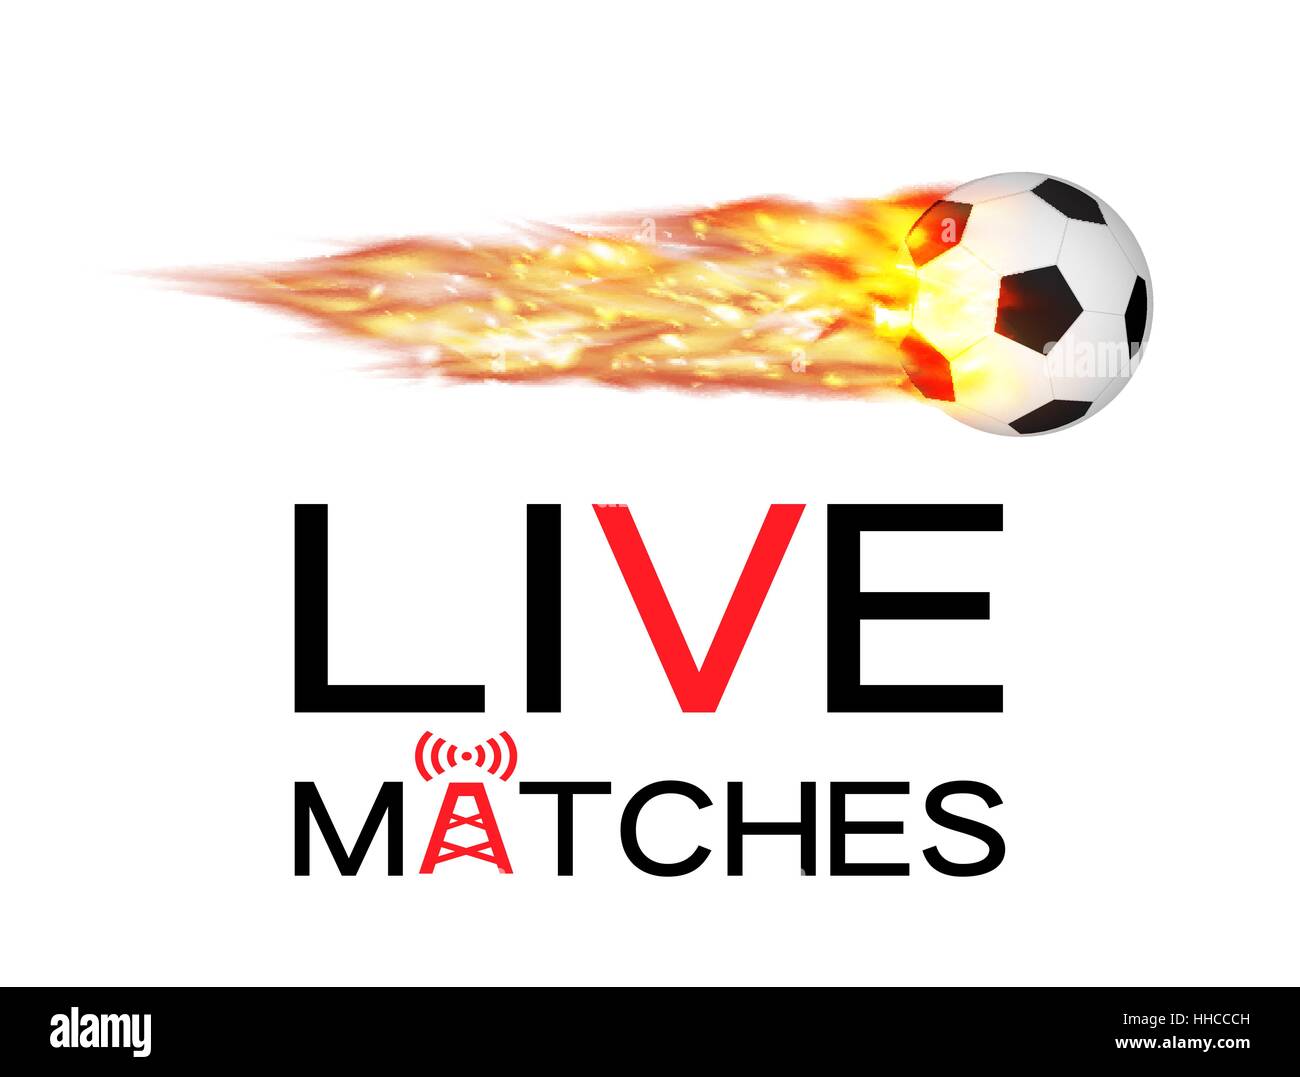 Soccer match de football en direct avec football logo feu Illustration de Vecteur